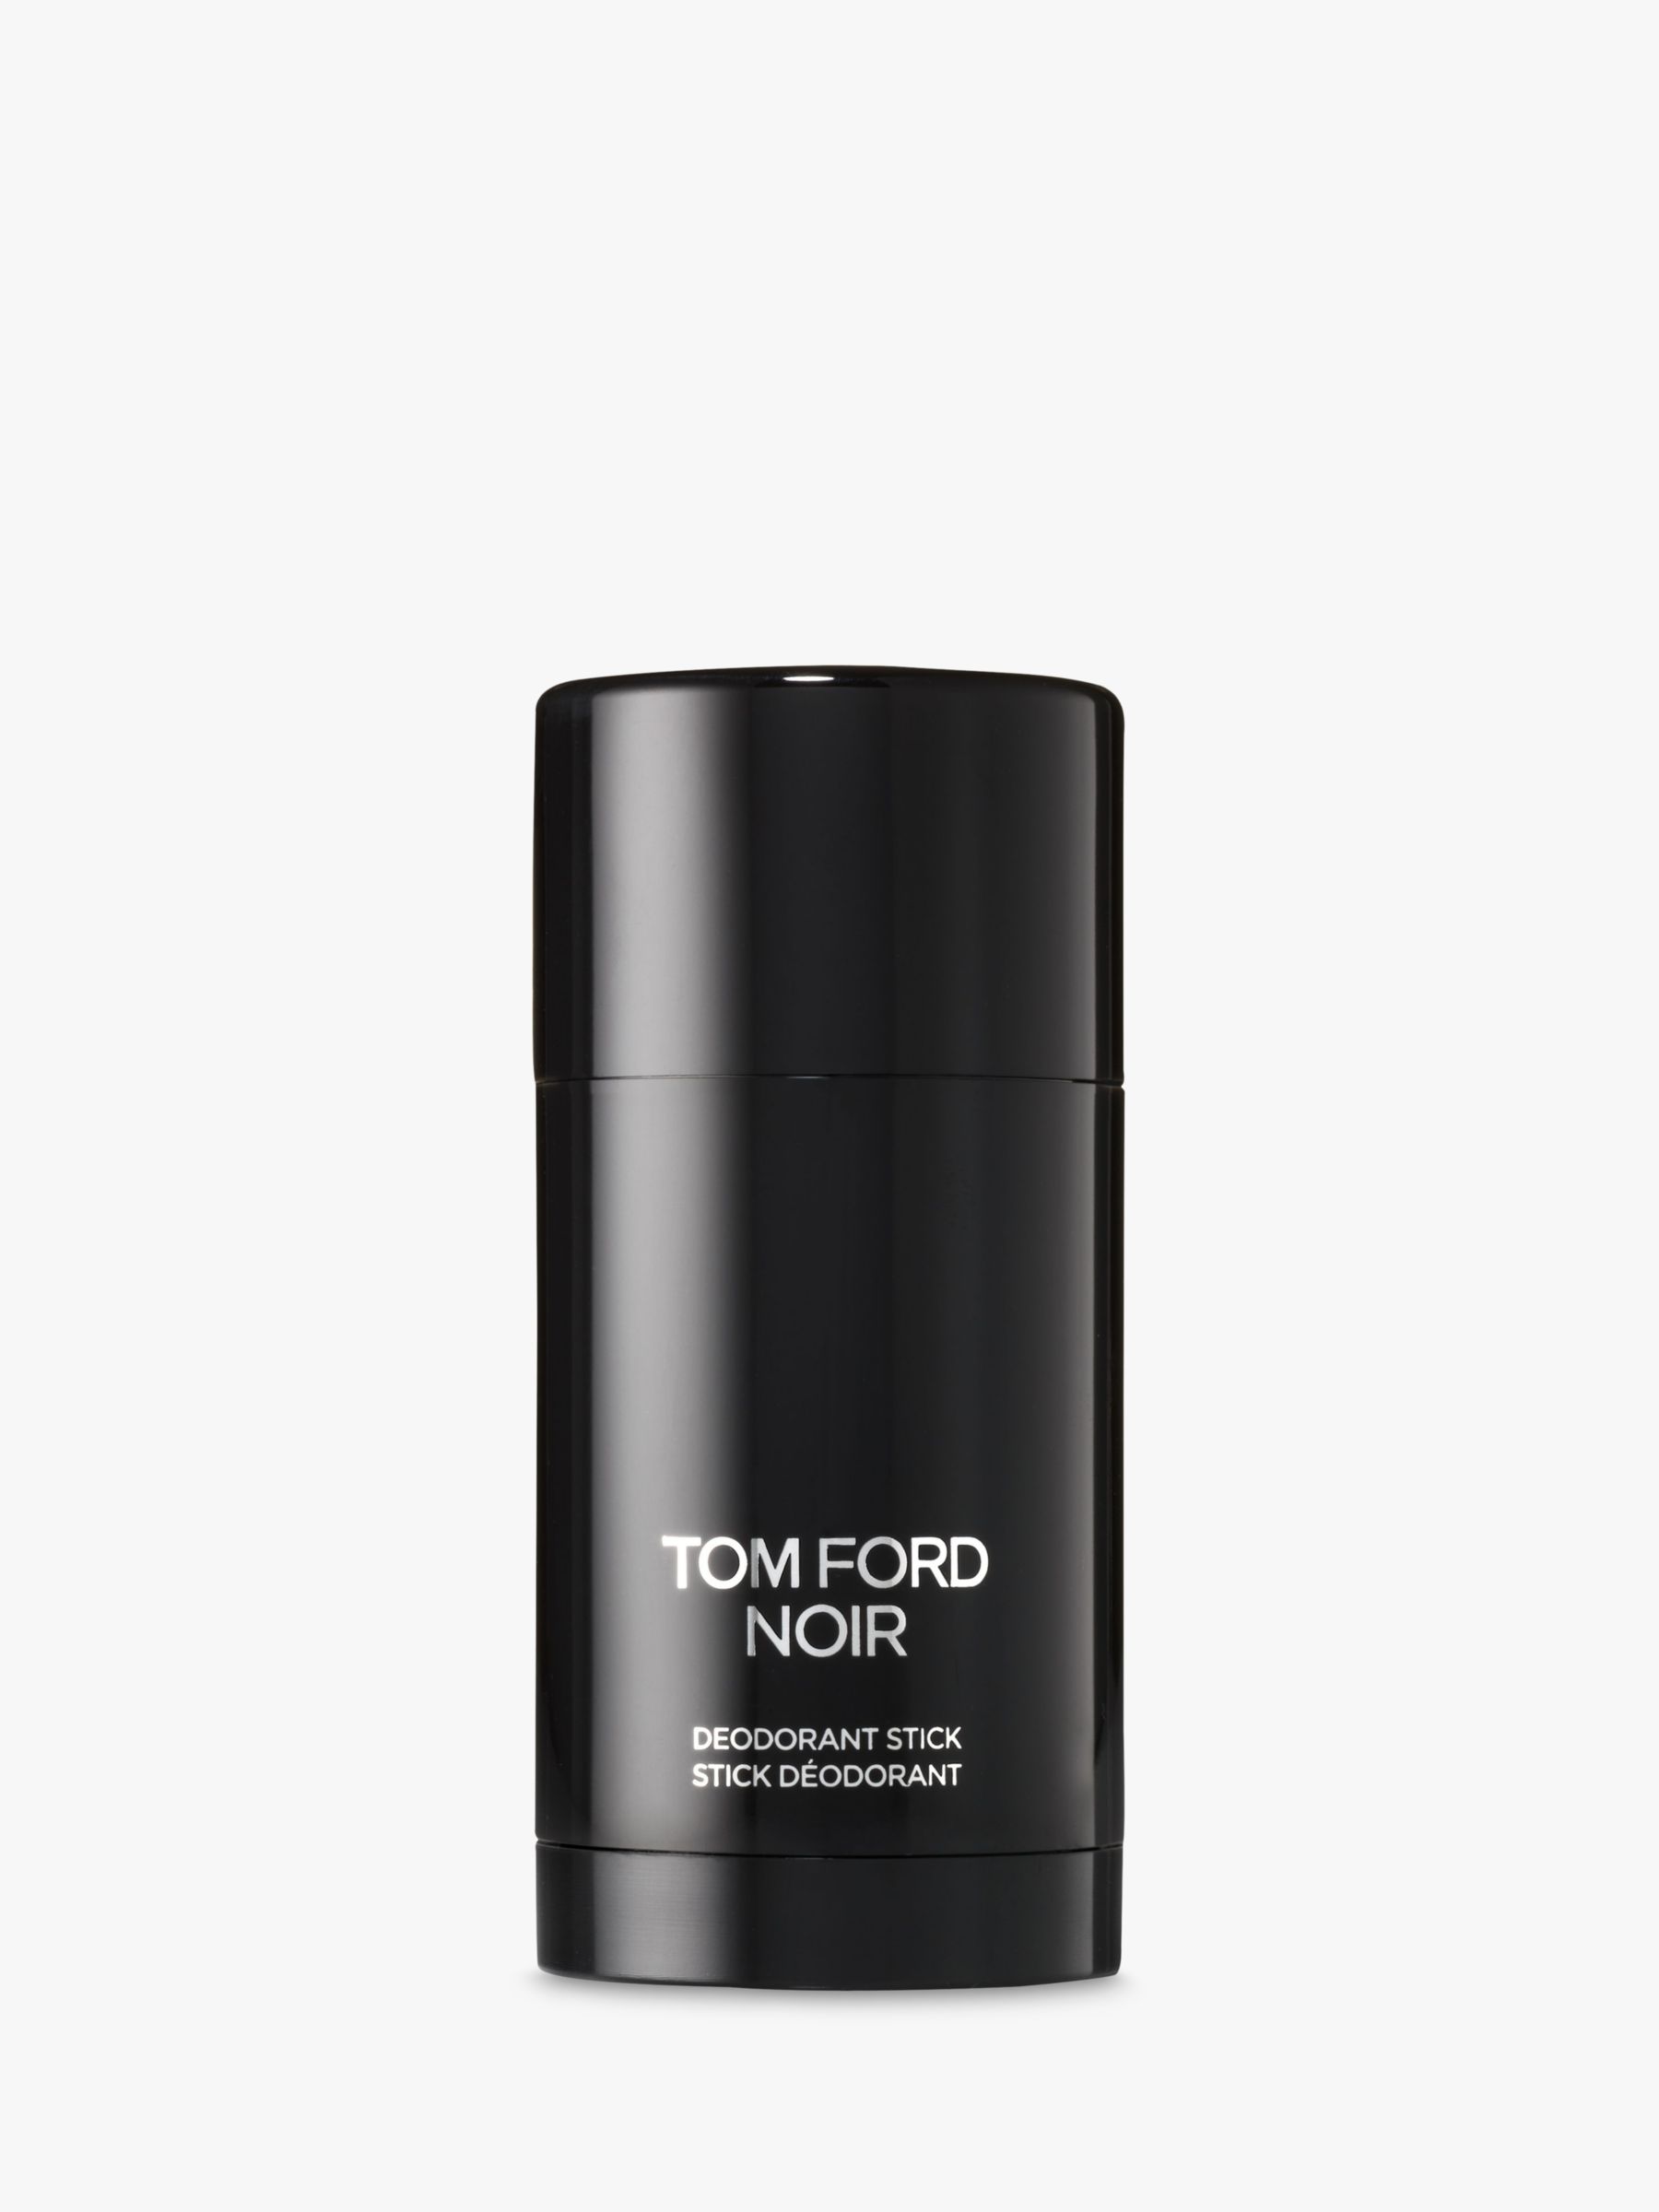 TOM FORD Noir Deodorant, 75ml at John Lewis & Partners